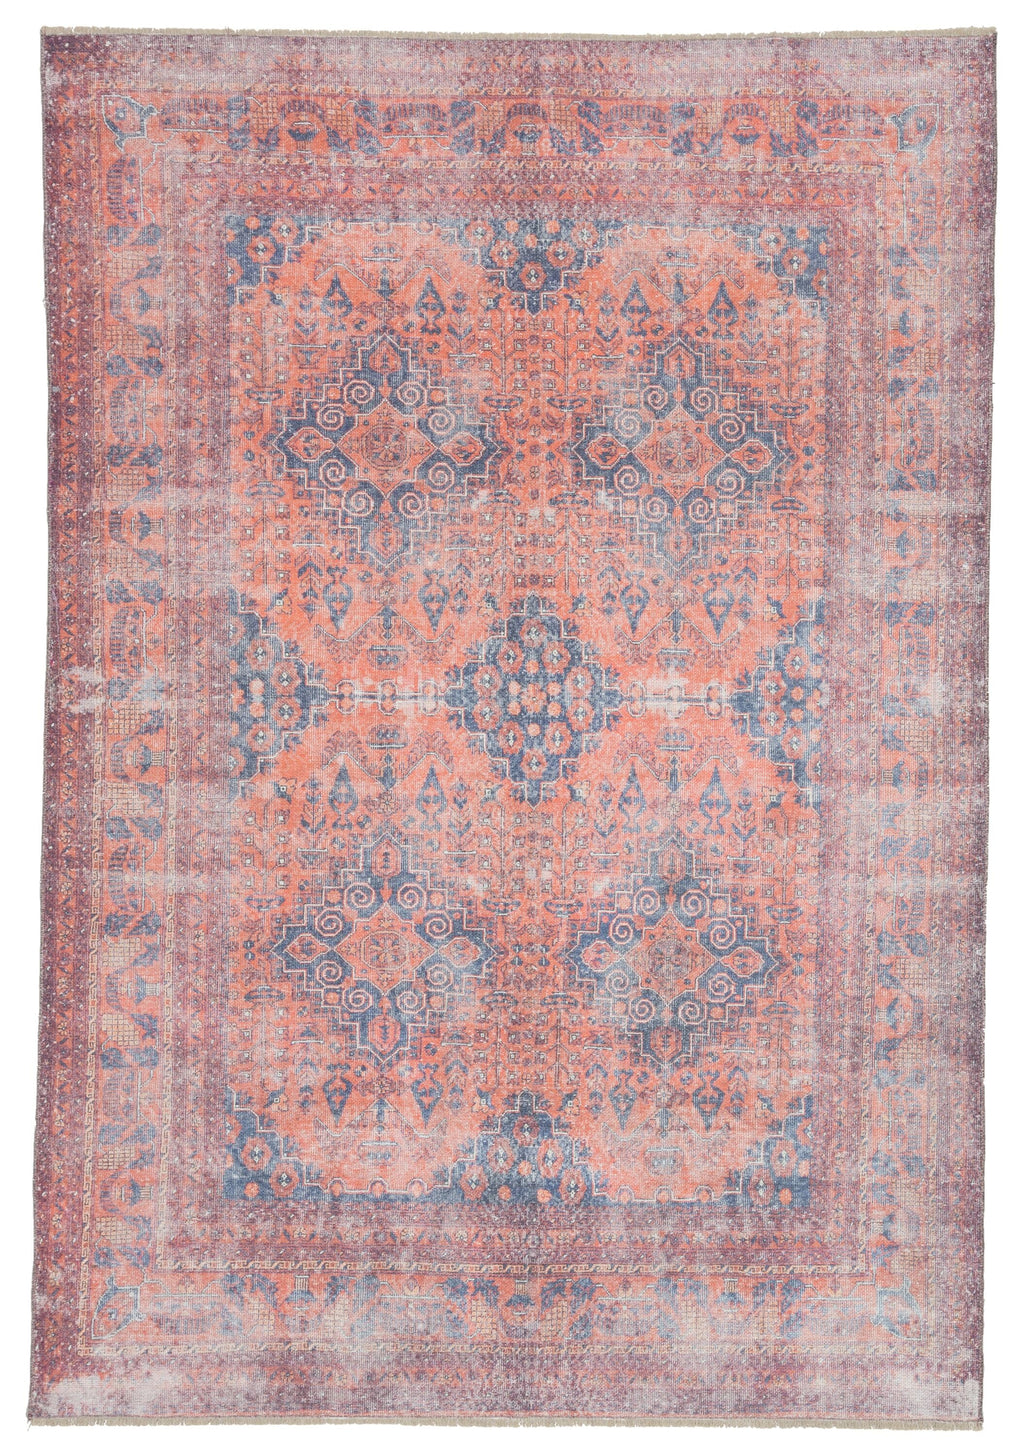 boh06 menowin medallion blue orange area rug design by jaipur 1